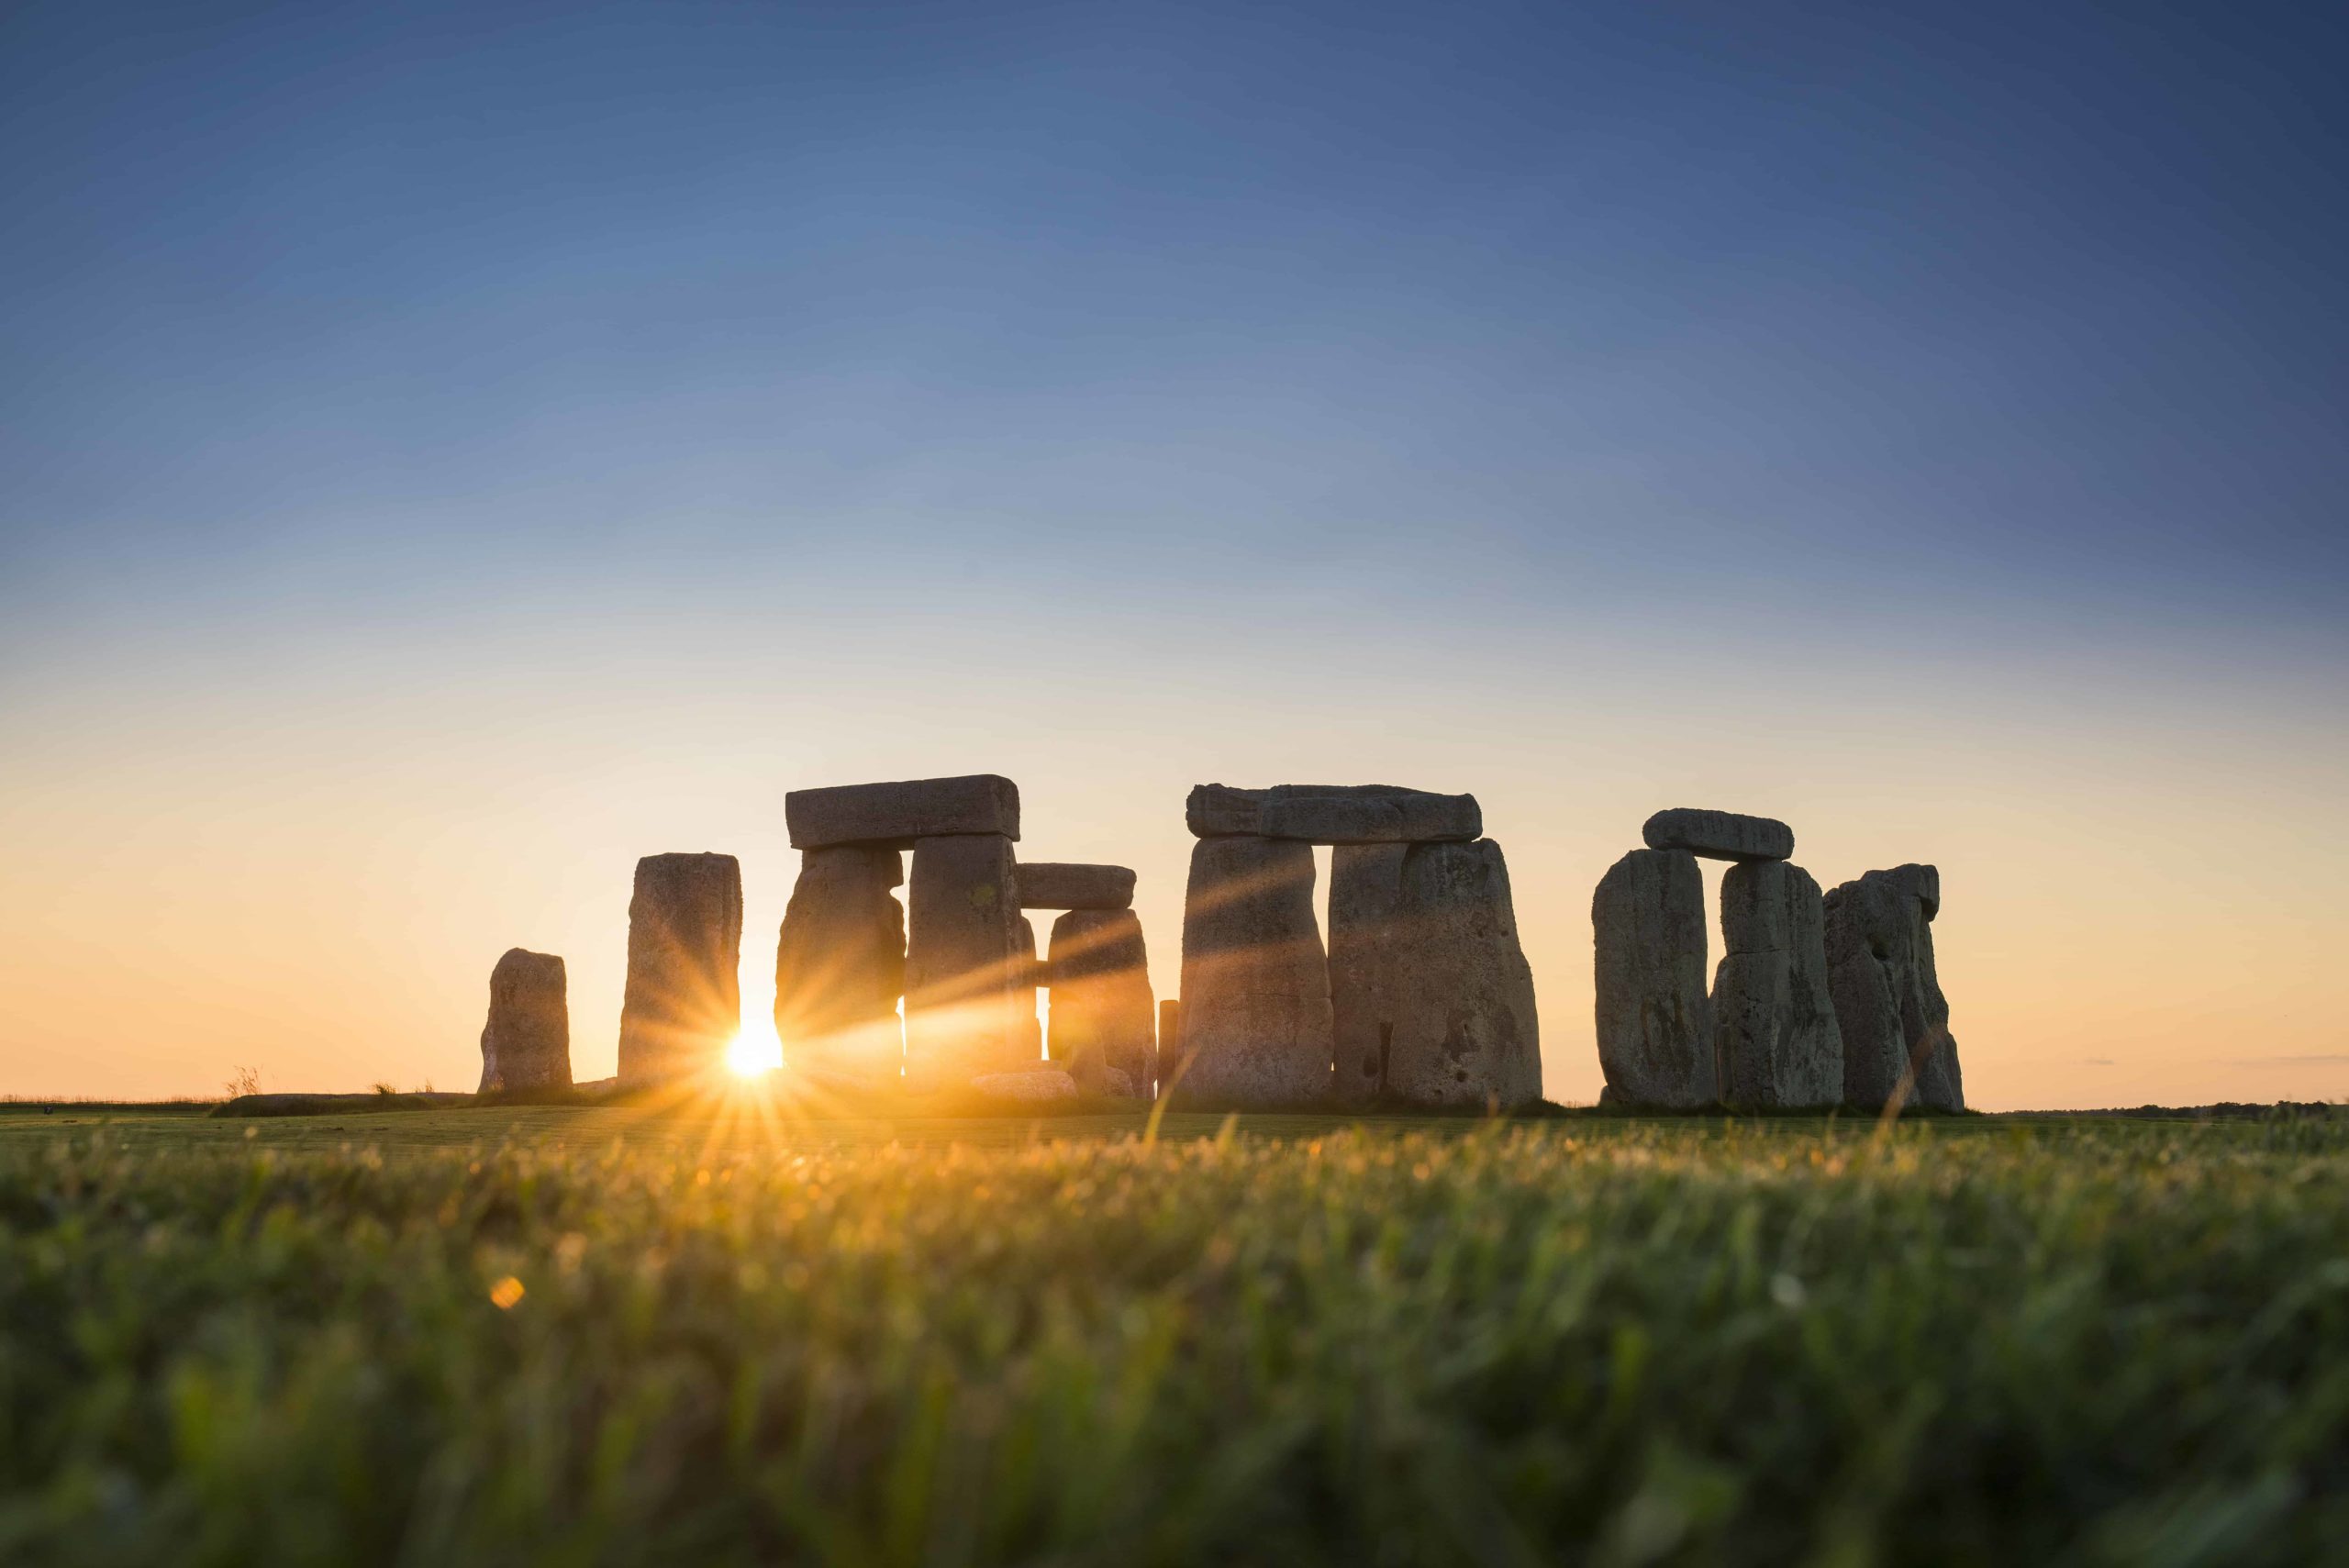 stonehenge tours from london